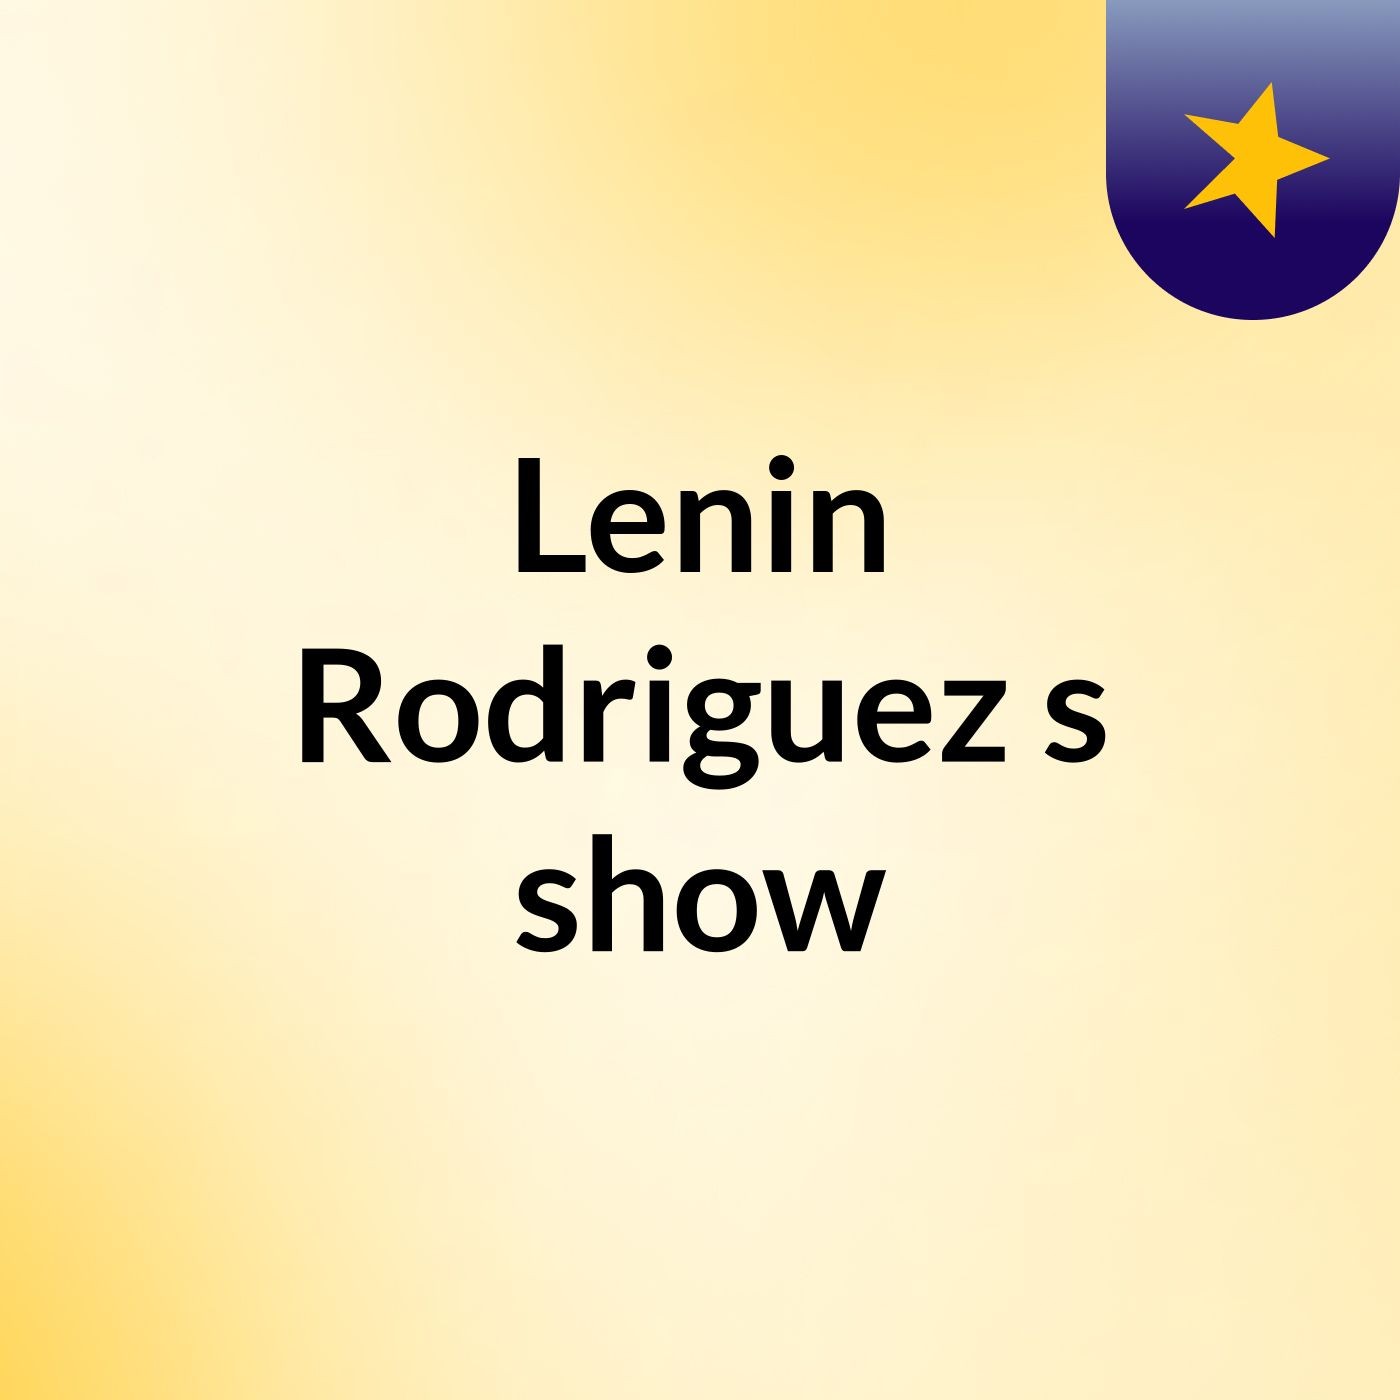 Lenin Rodriguez's show